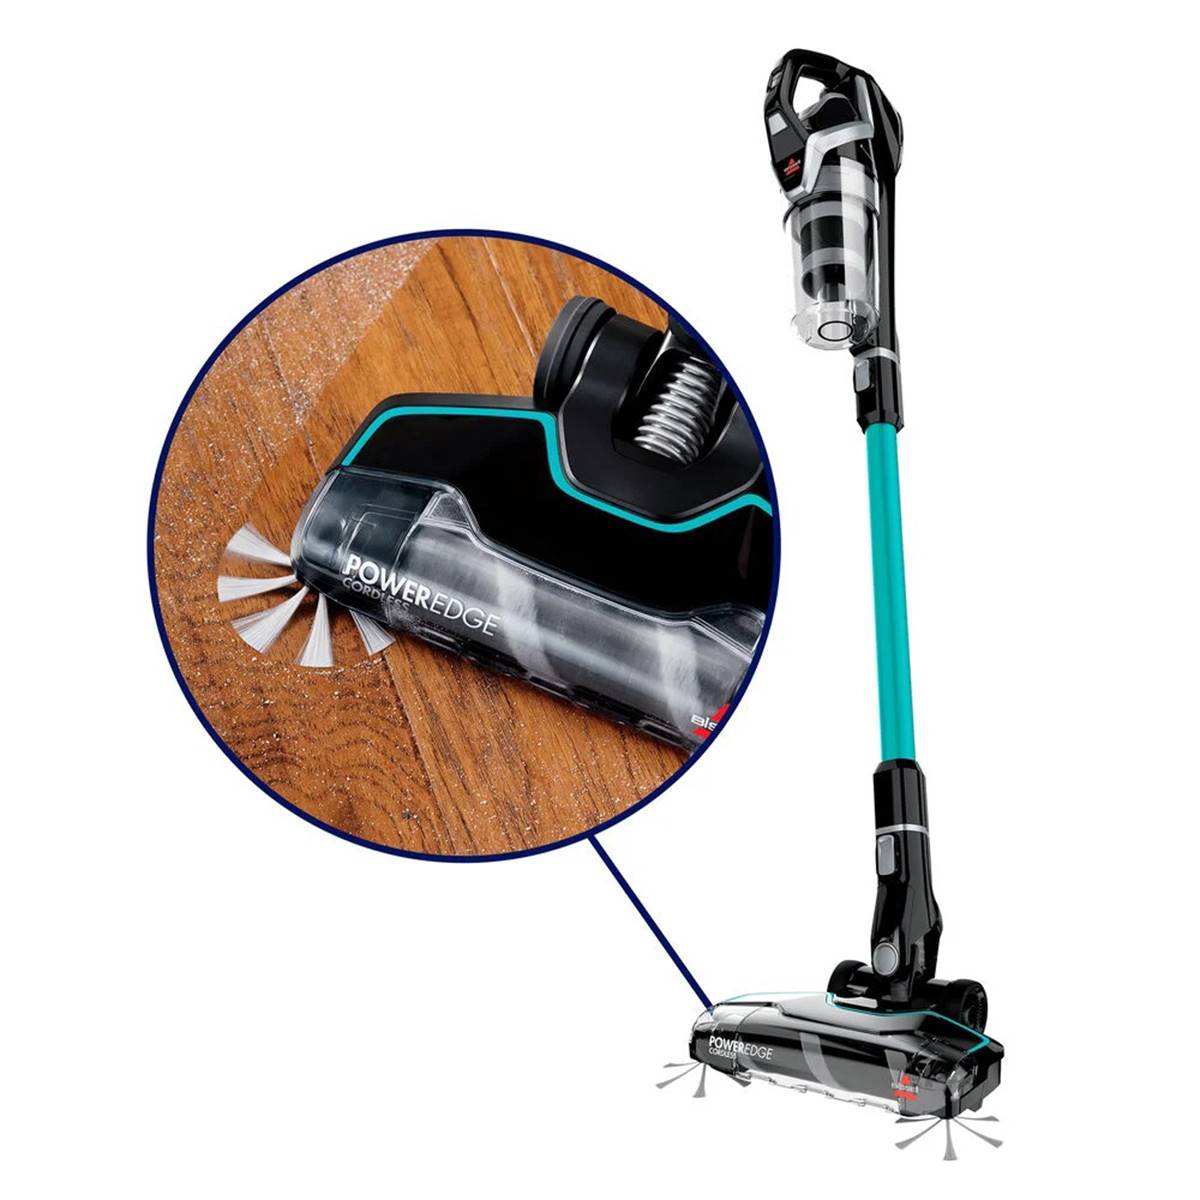 Bissell(R) PowerEdge Cordless Stick Vacuum